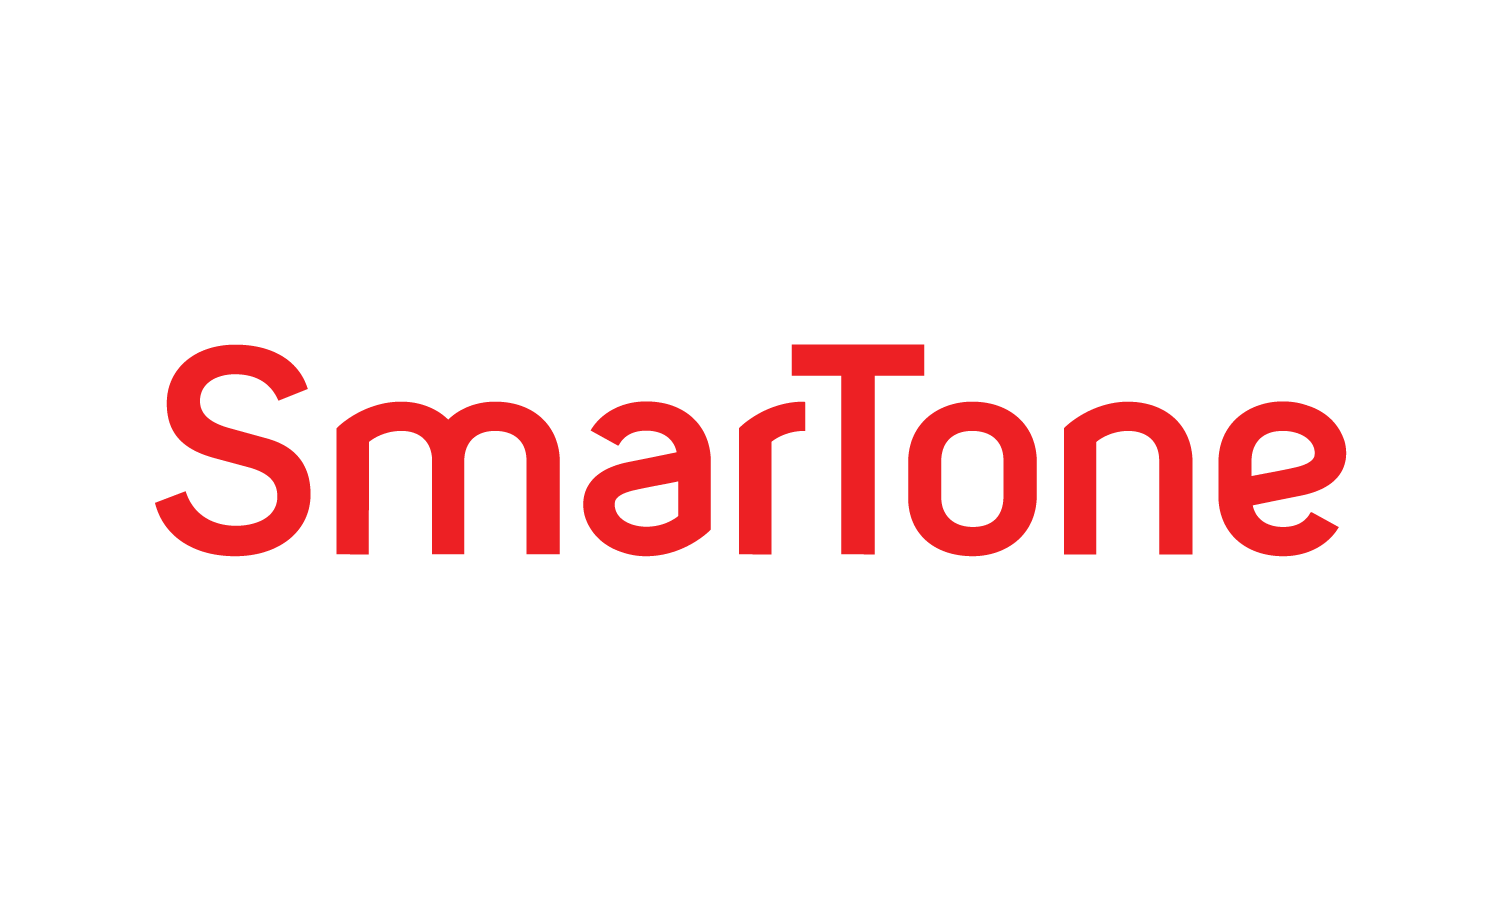 SmarTone – App Development for Digital Product (2011, HK)